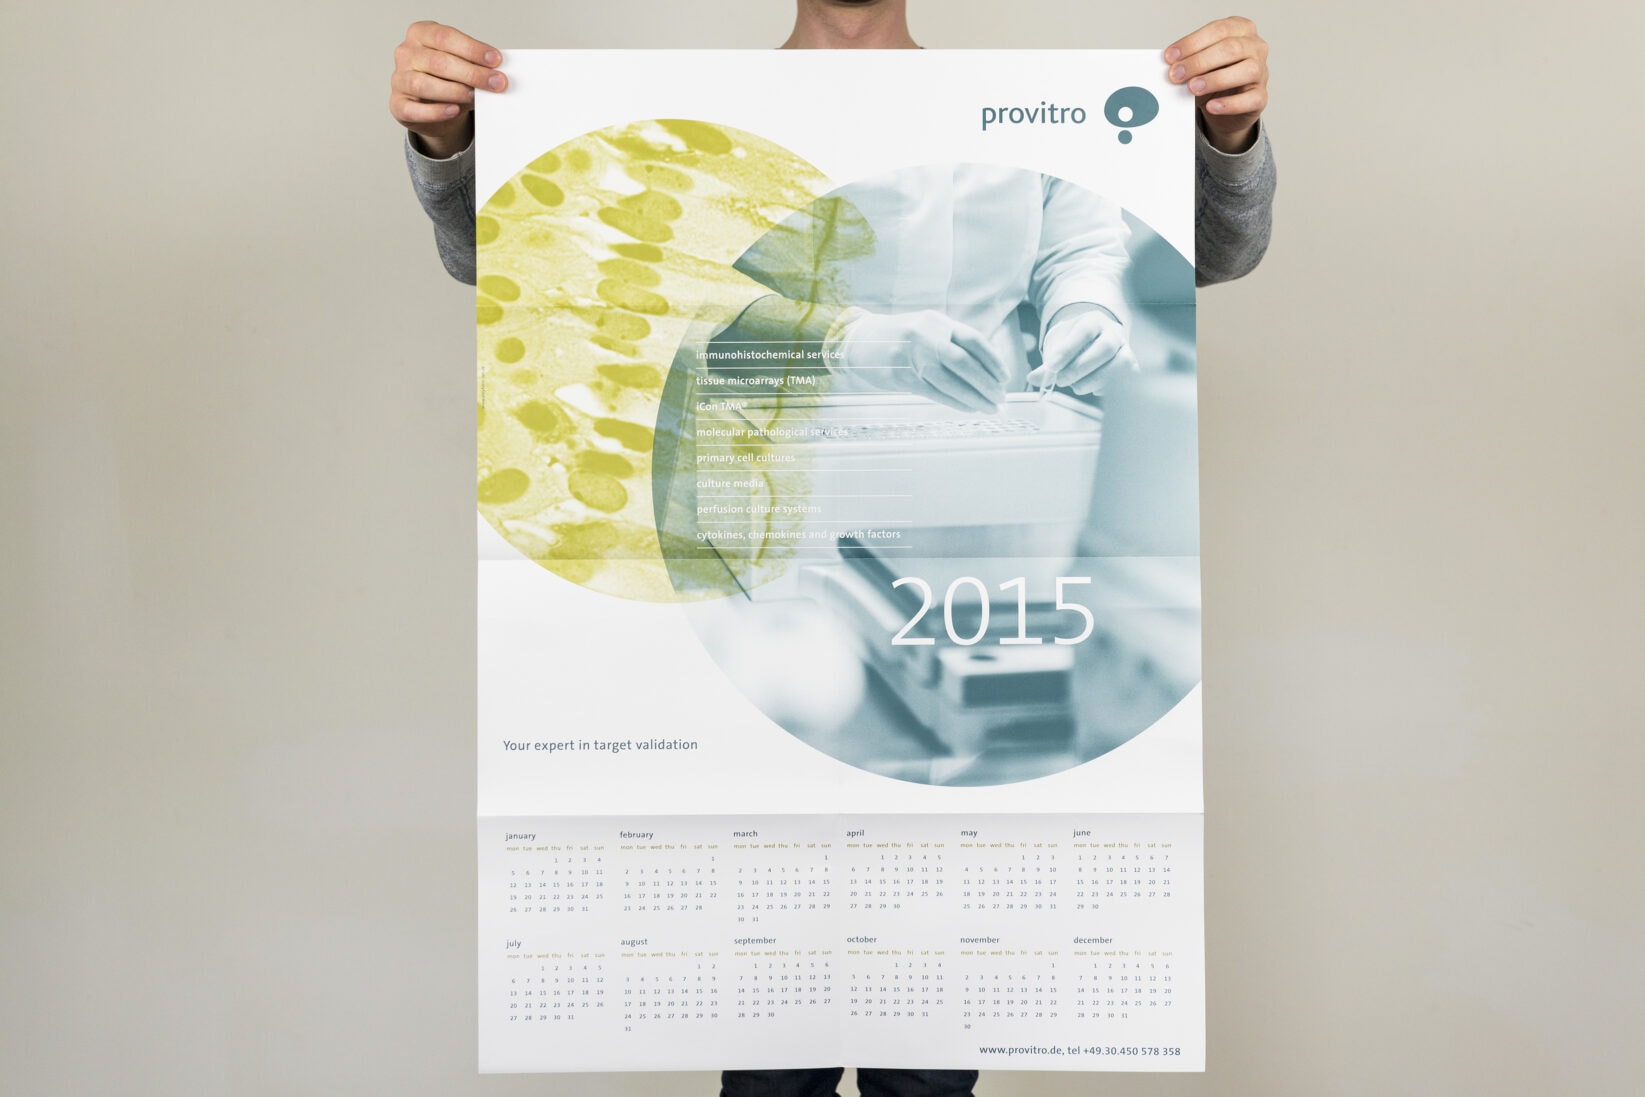 provitro Corporate Design Katalog Kalender